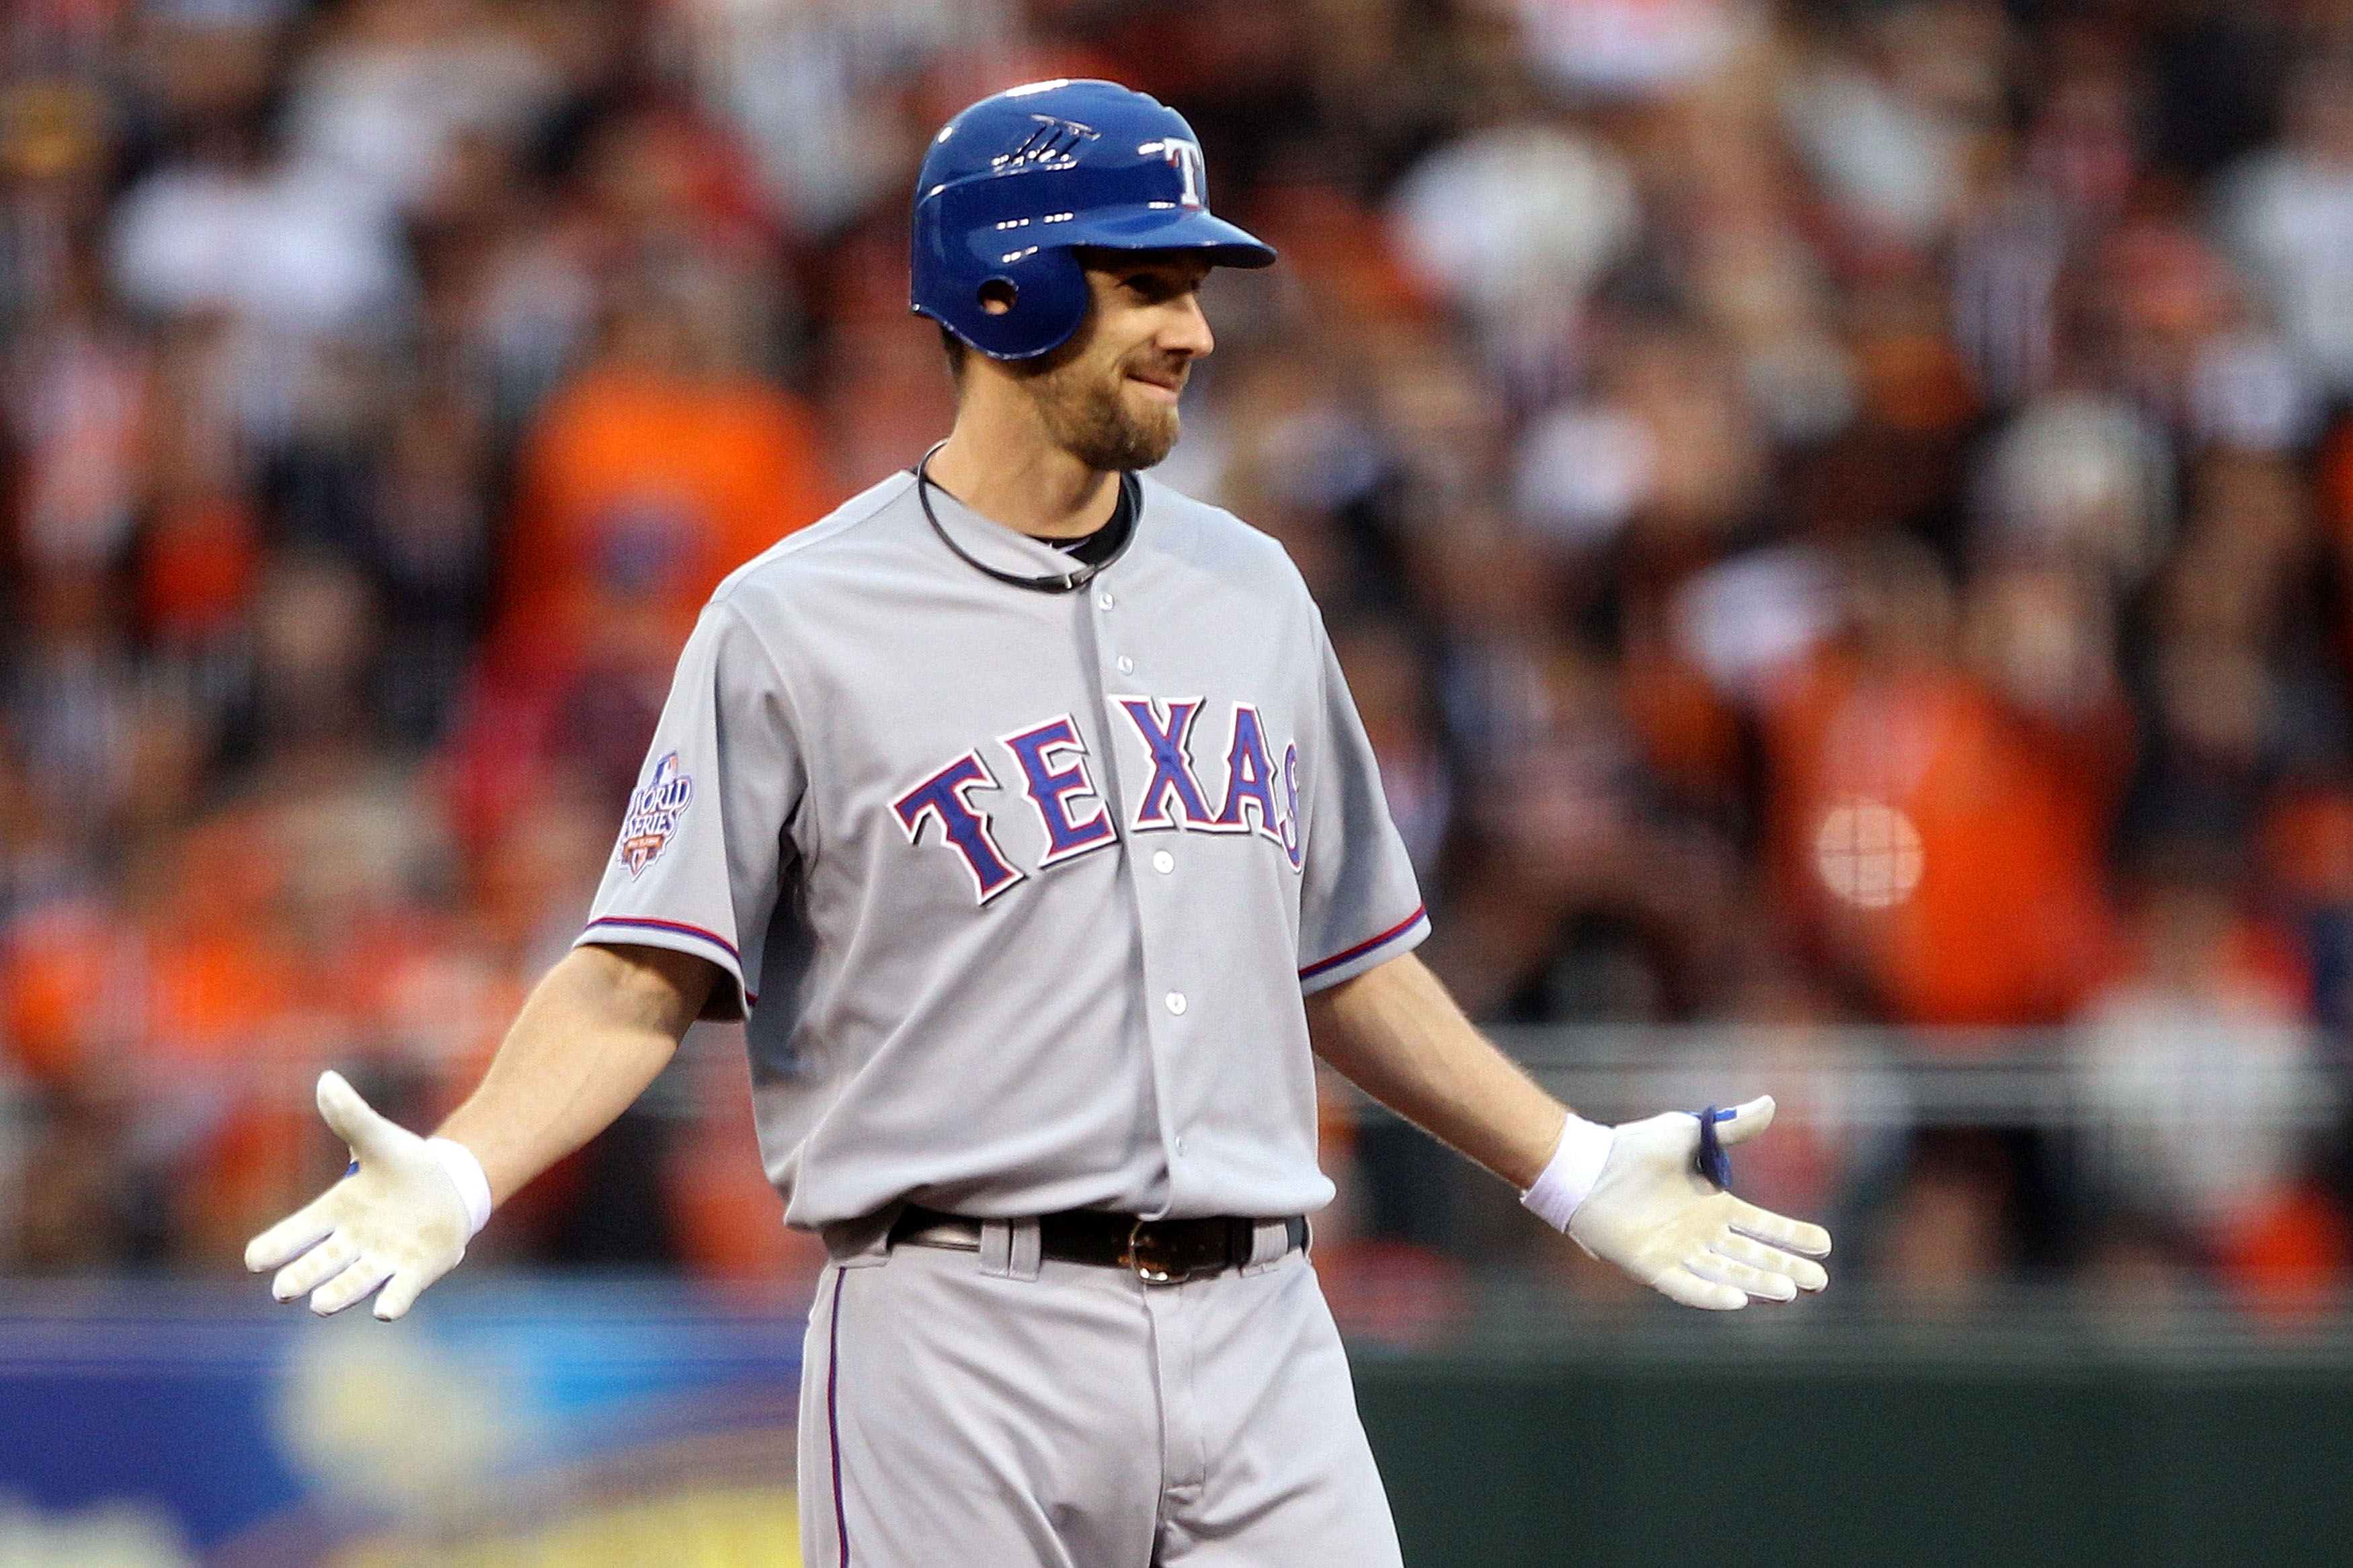 Mitch Moreland Talks Retirement, Texas Rangers, College World Series